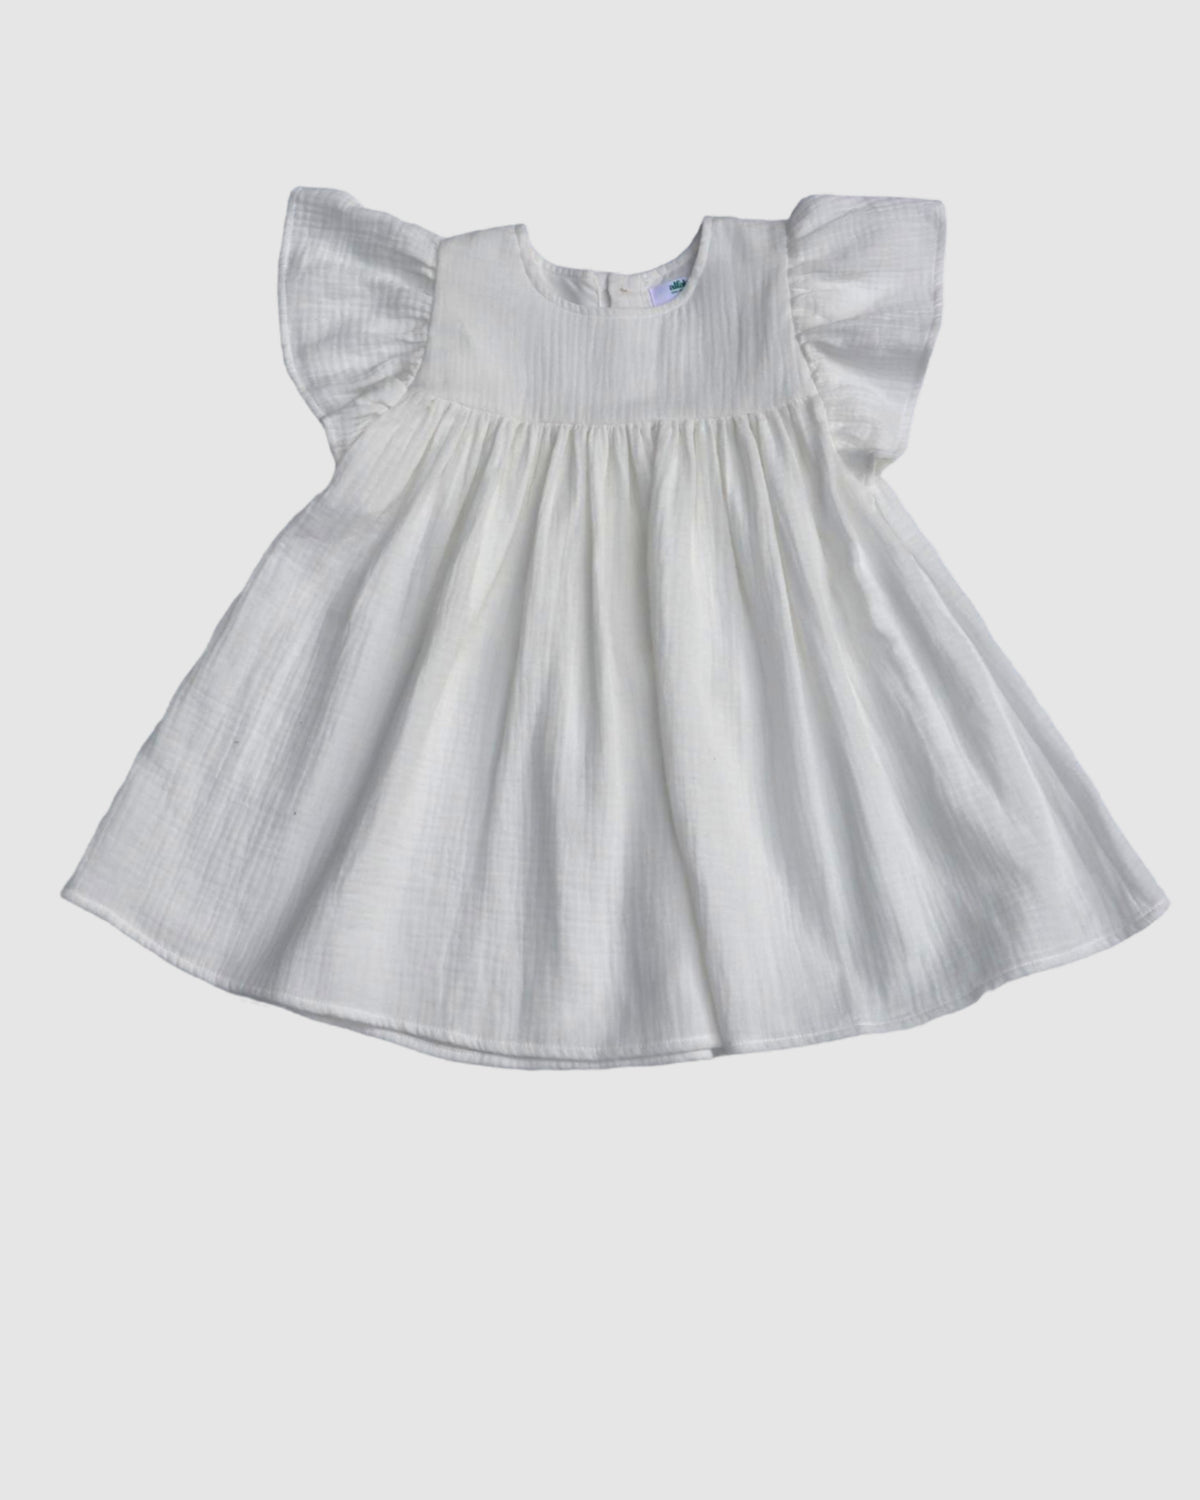 Ivy Babydoll Dress in Cotton Muslin